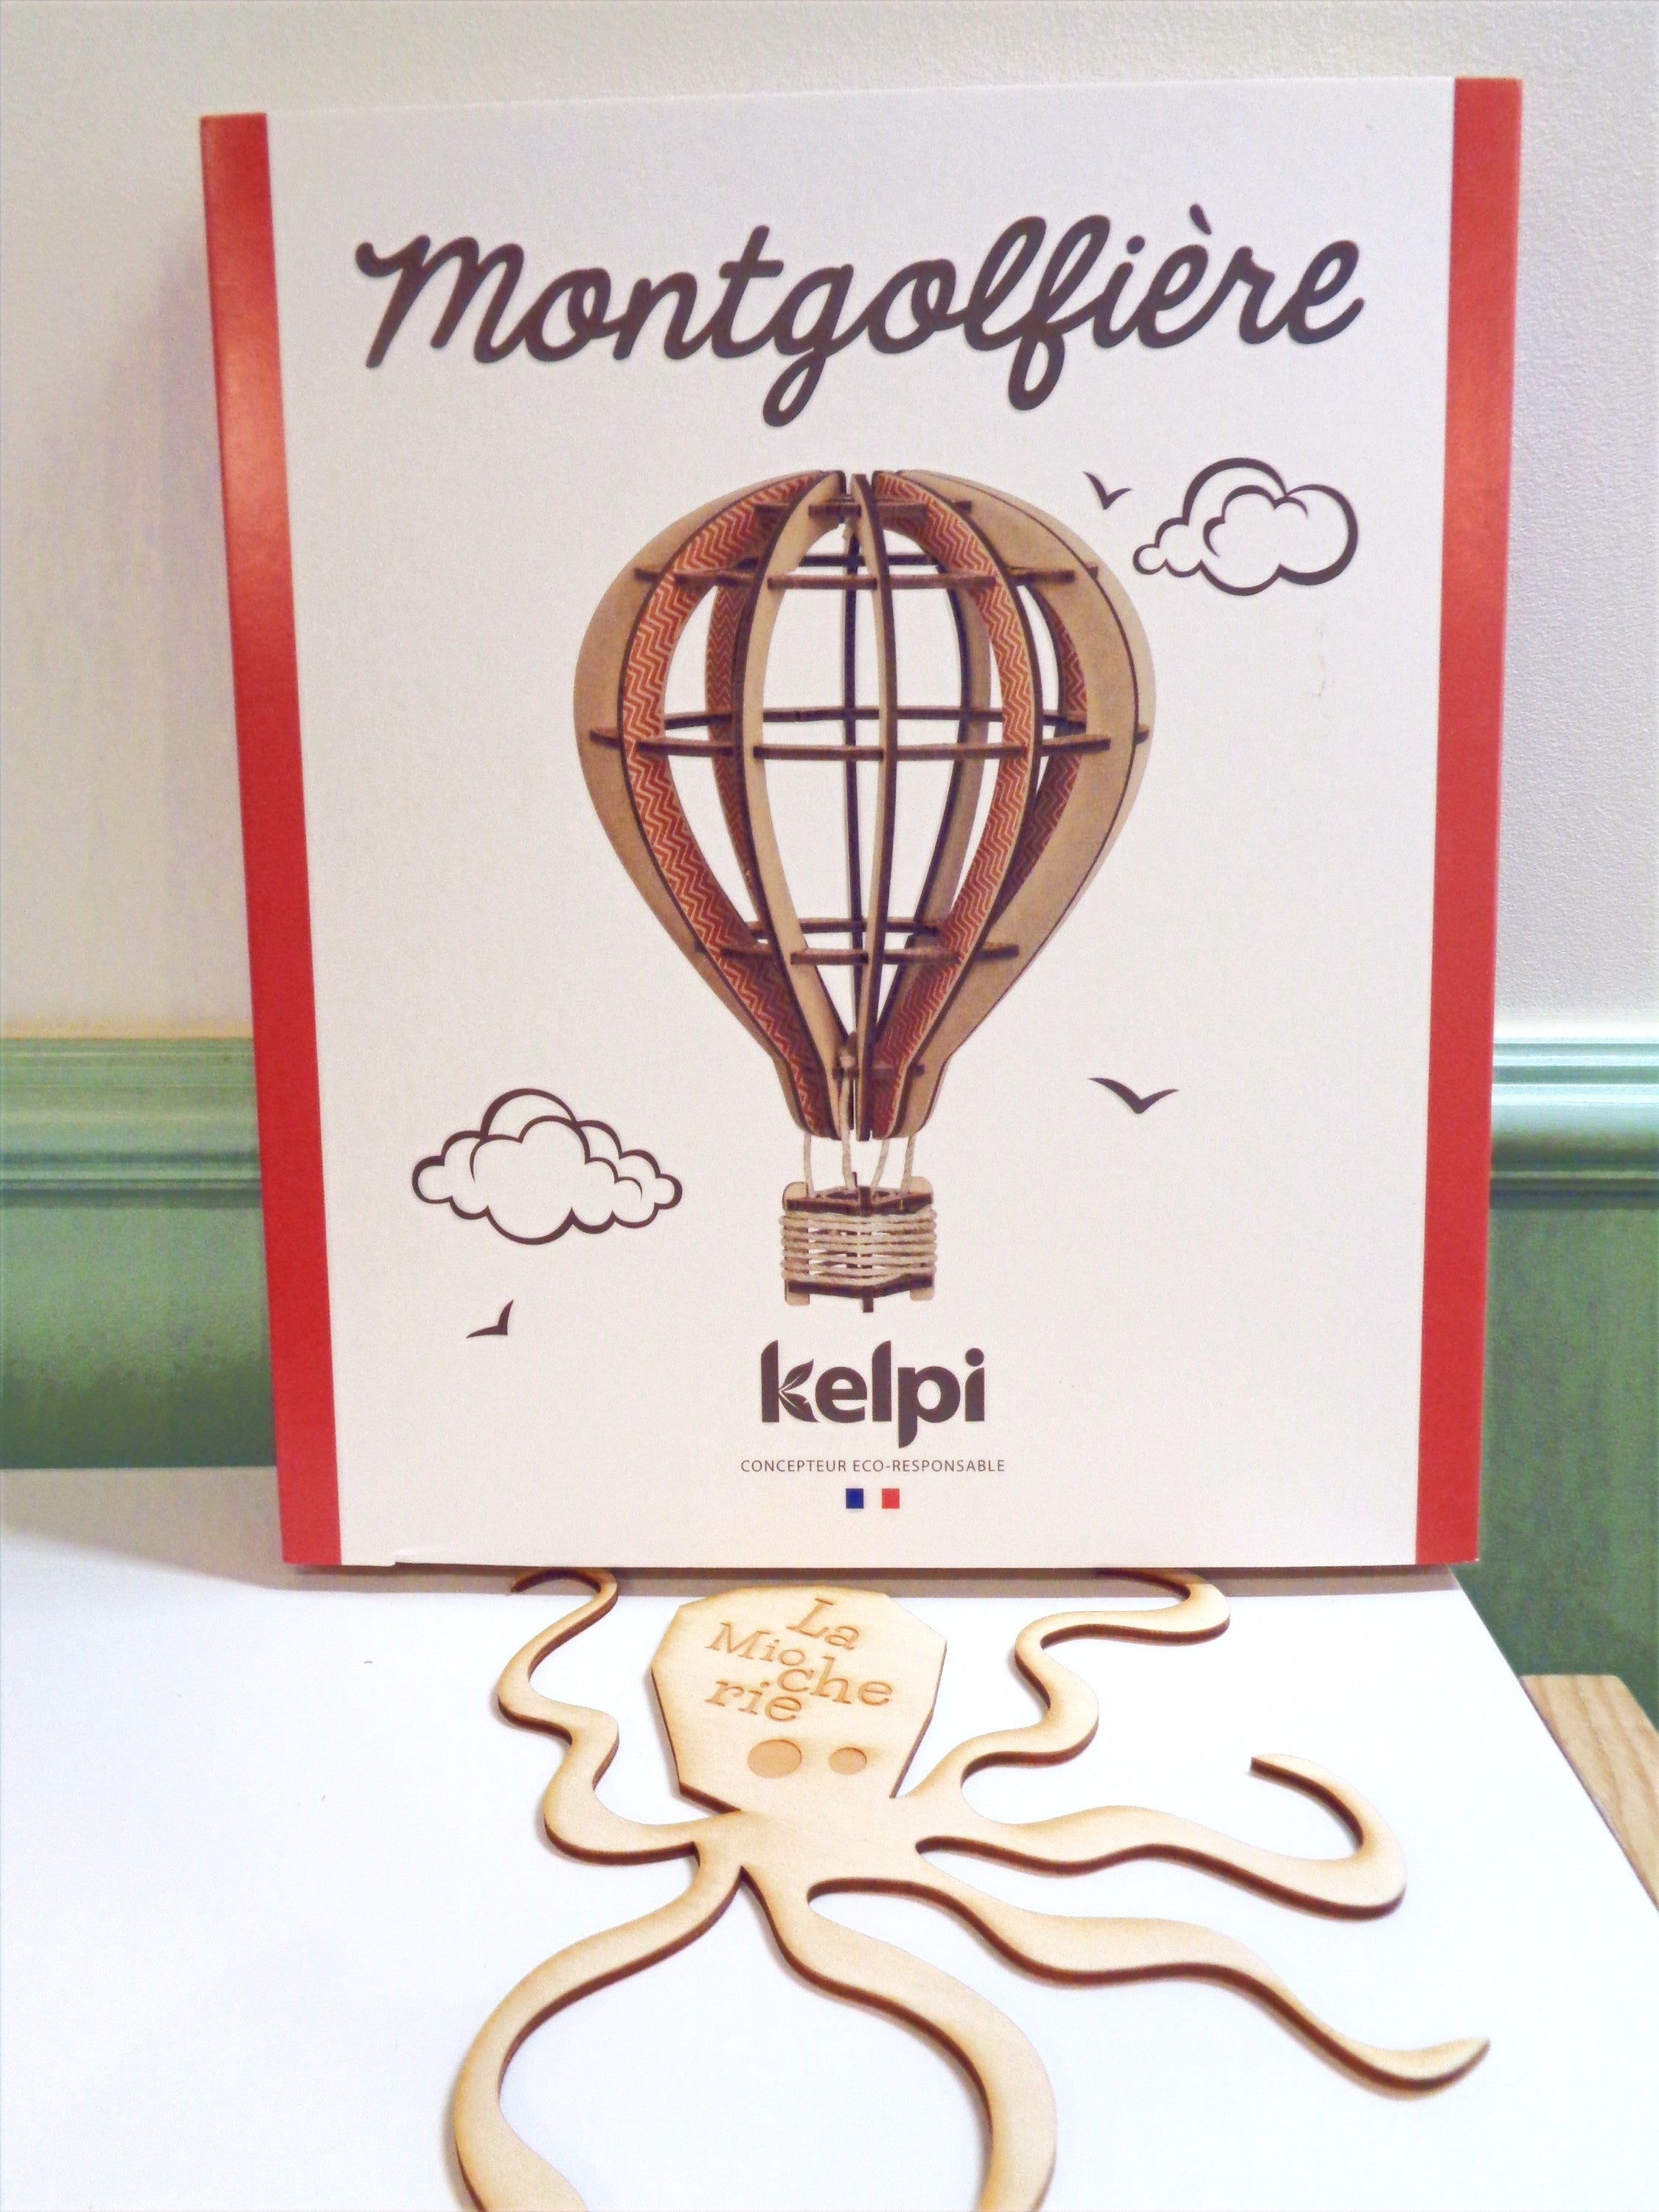 The model hot air balloon - Kelpi -